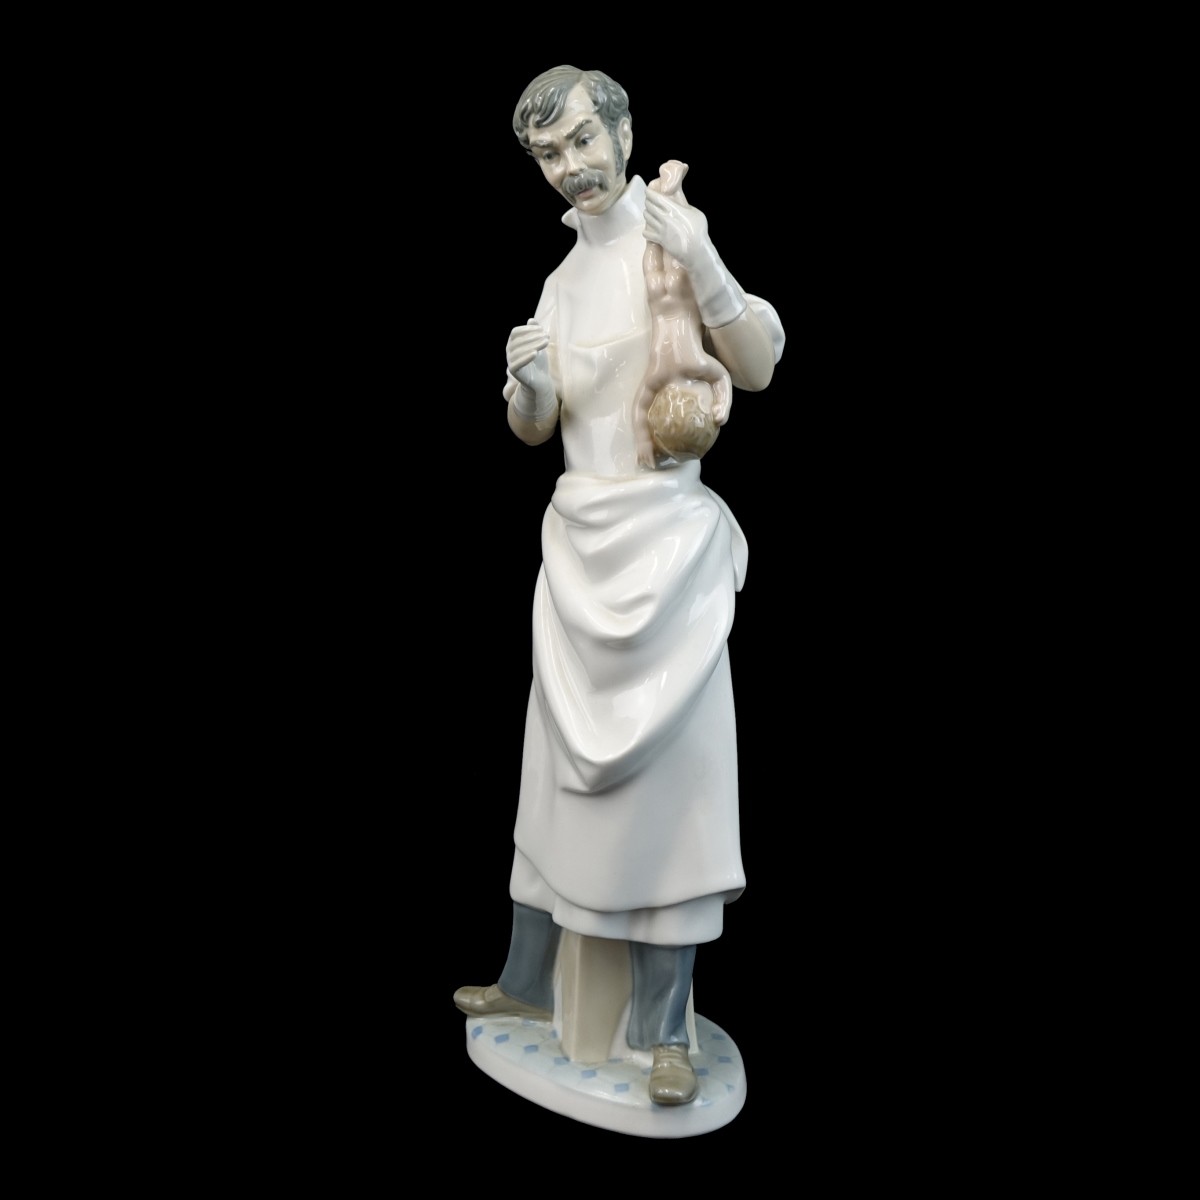 Lladro "Obstetrician Doctor" Porcelain Figurine